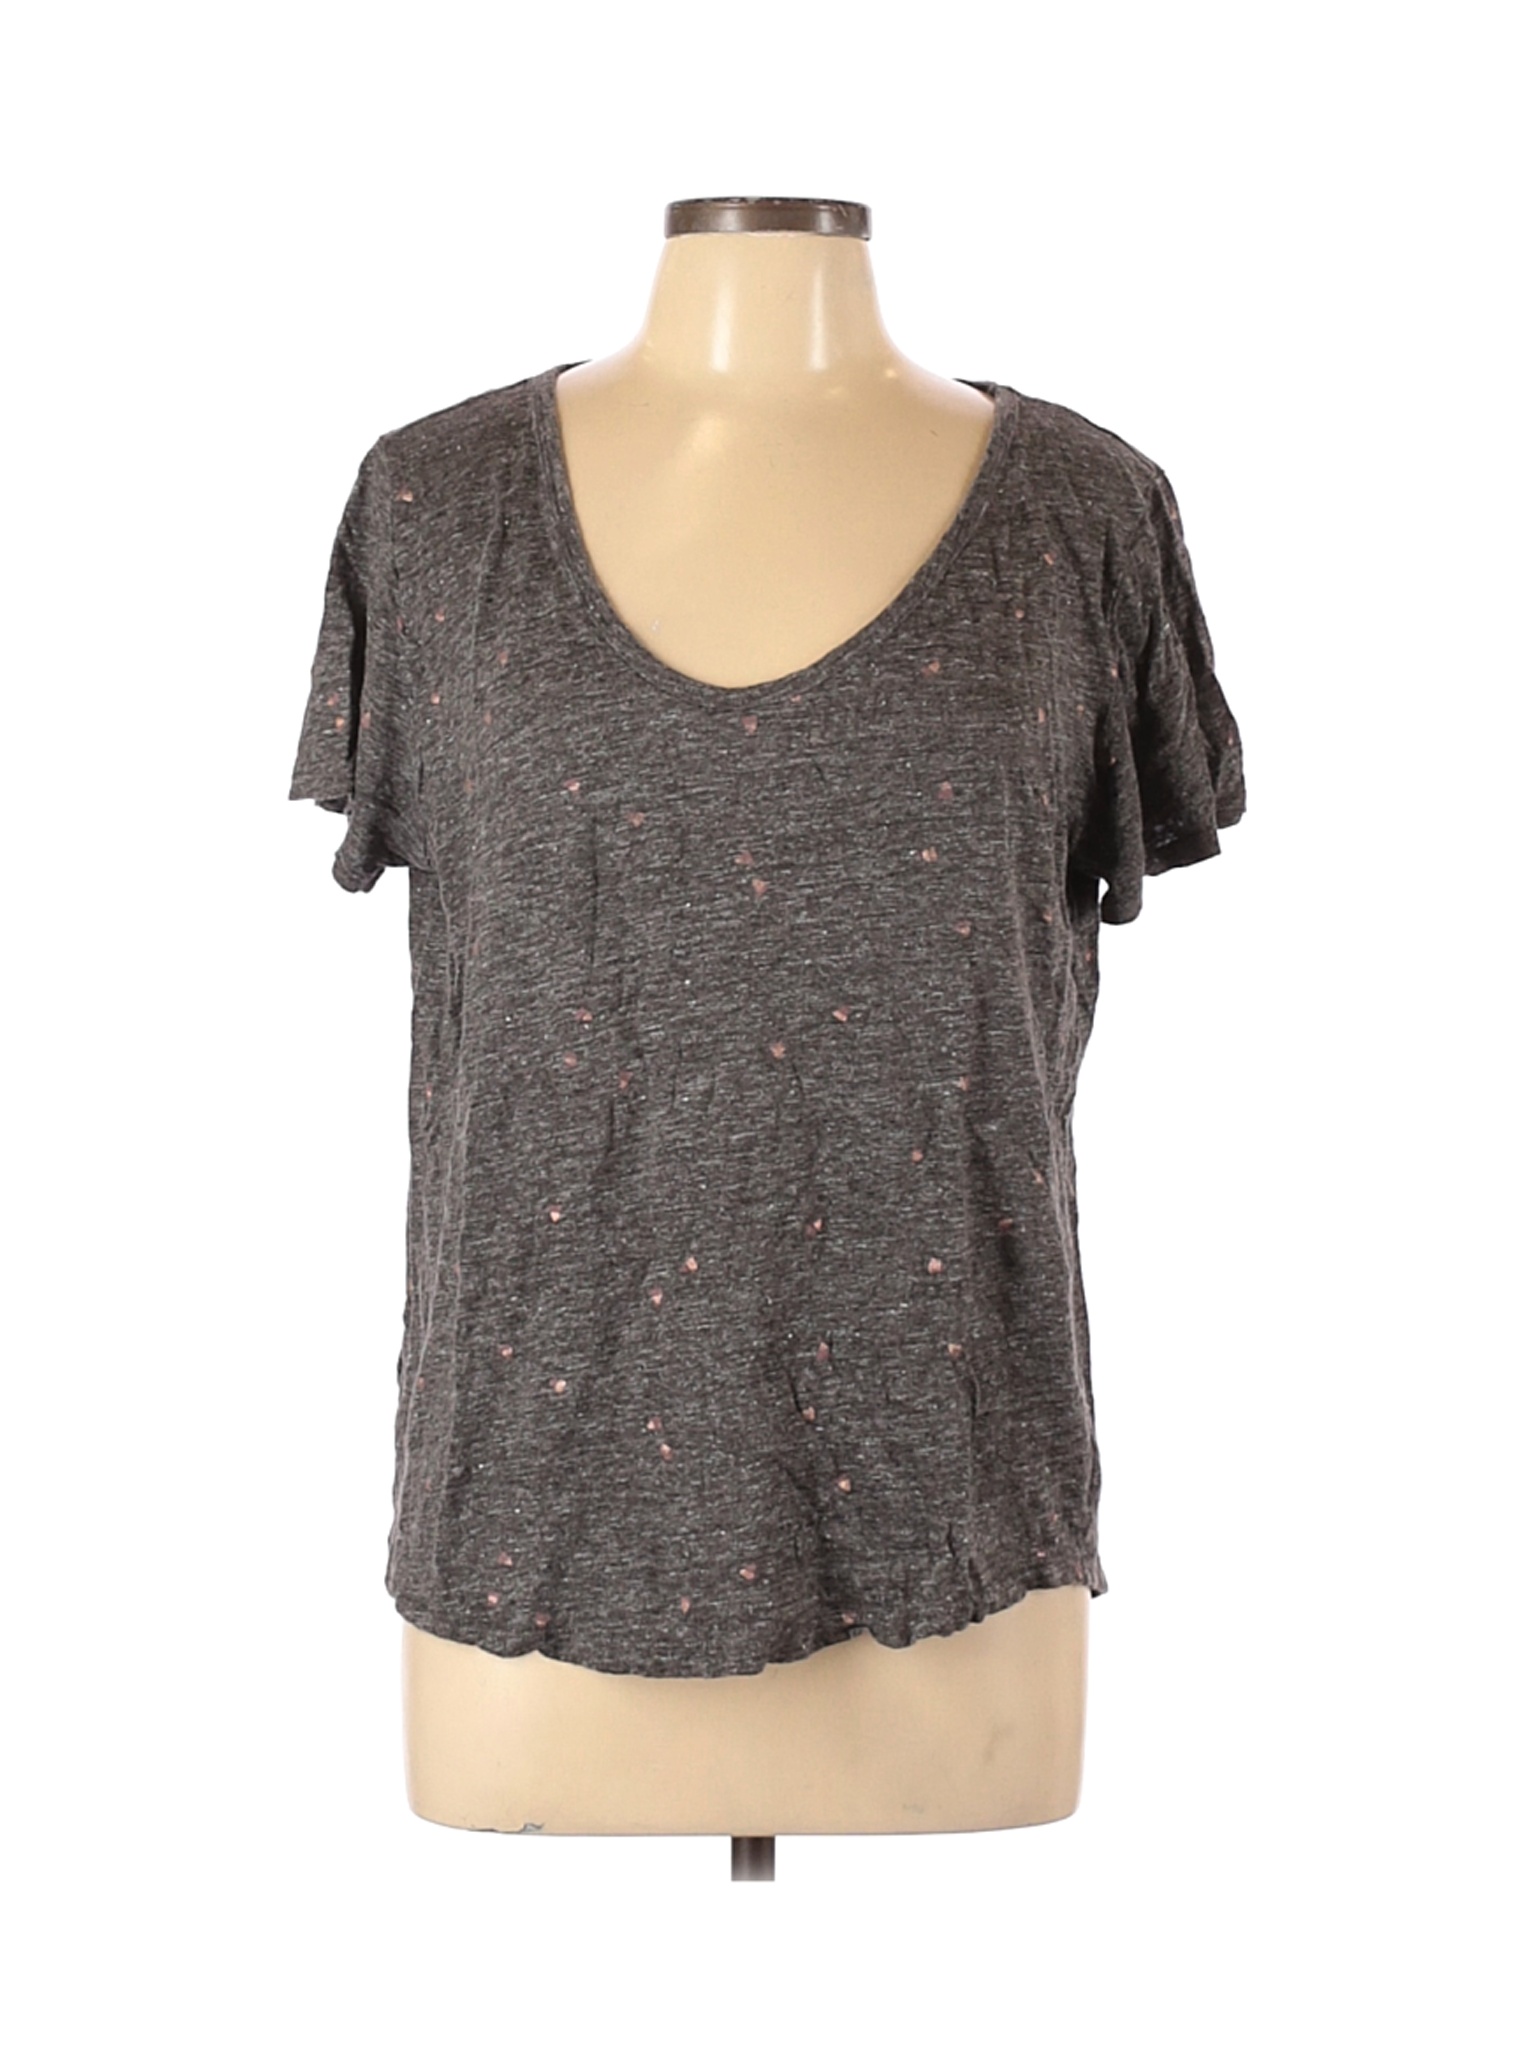 Country Road Women Gray Short Sleeve T-Shirt L | eBay